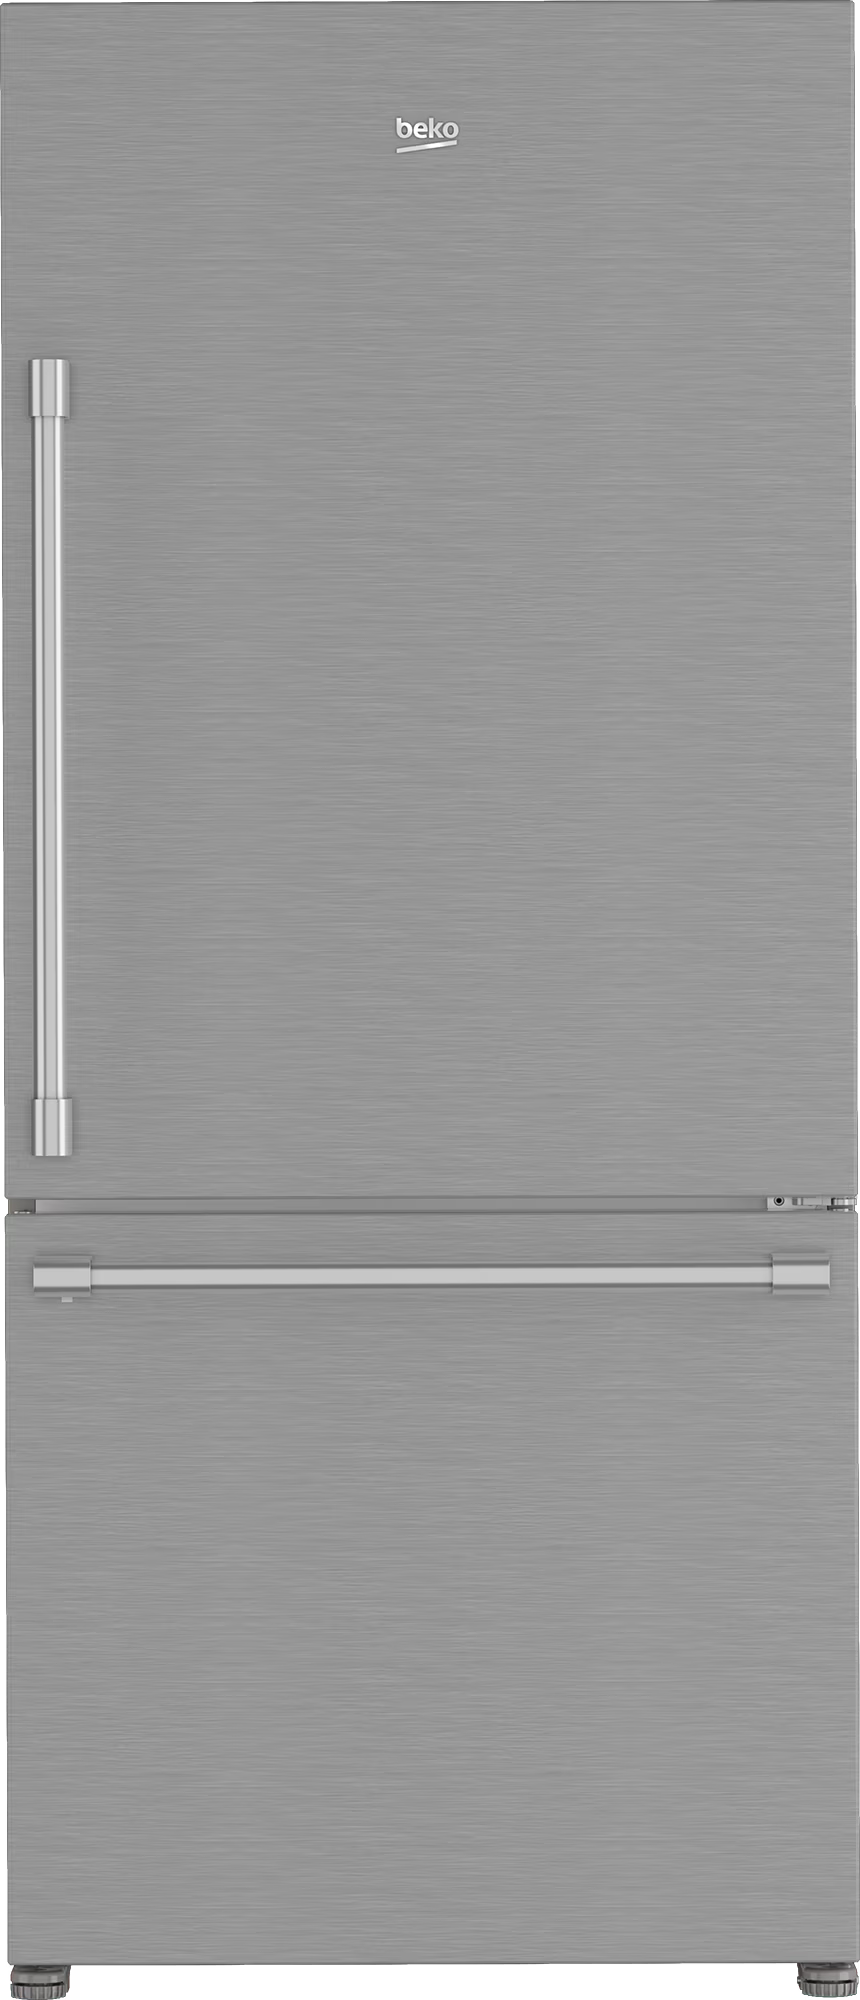 Beko 30 Inch 30 Counter Depth Bottom Freezer Refrigerator BFBD30216SSIM